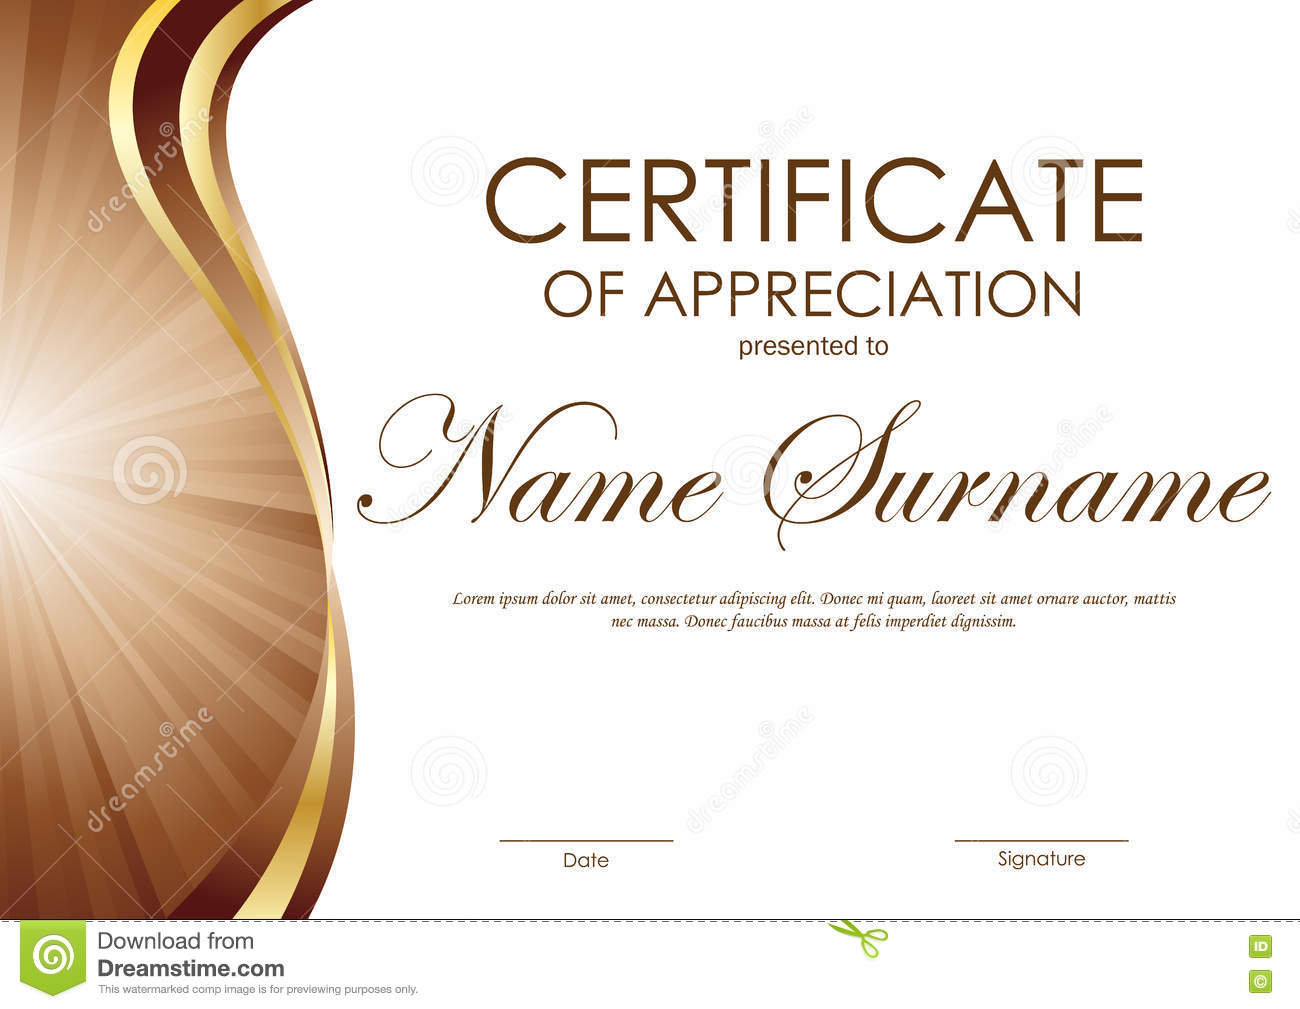 Certificate of Appreciation Template Stock Vector - Illustration